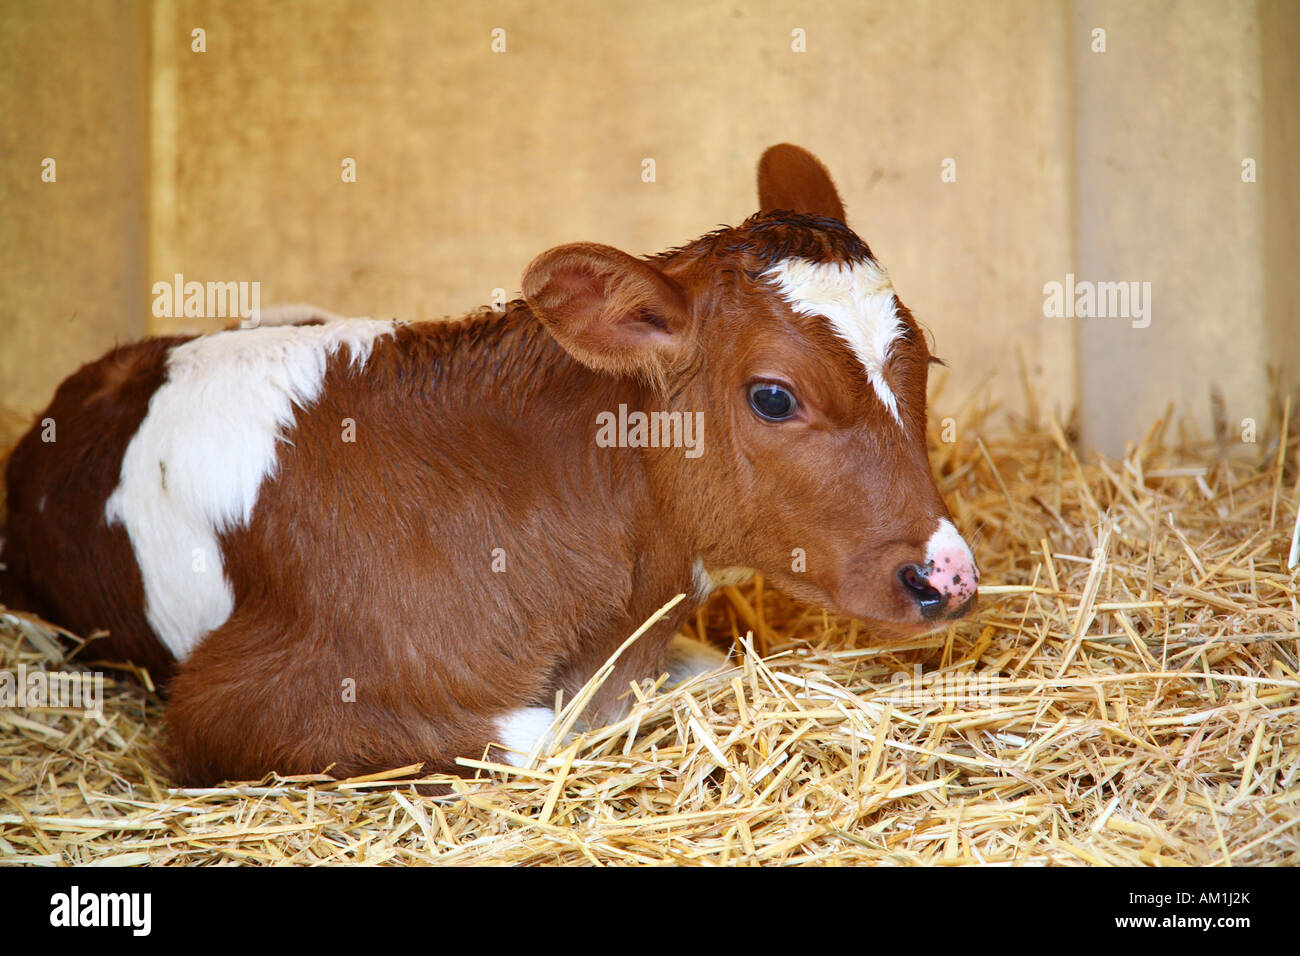 Lying calf Stock Photo